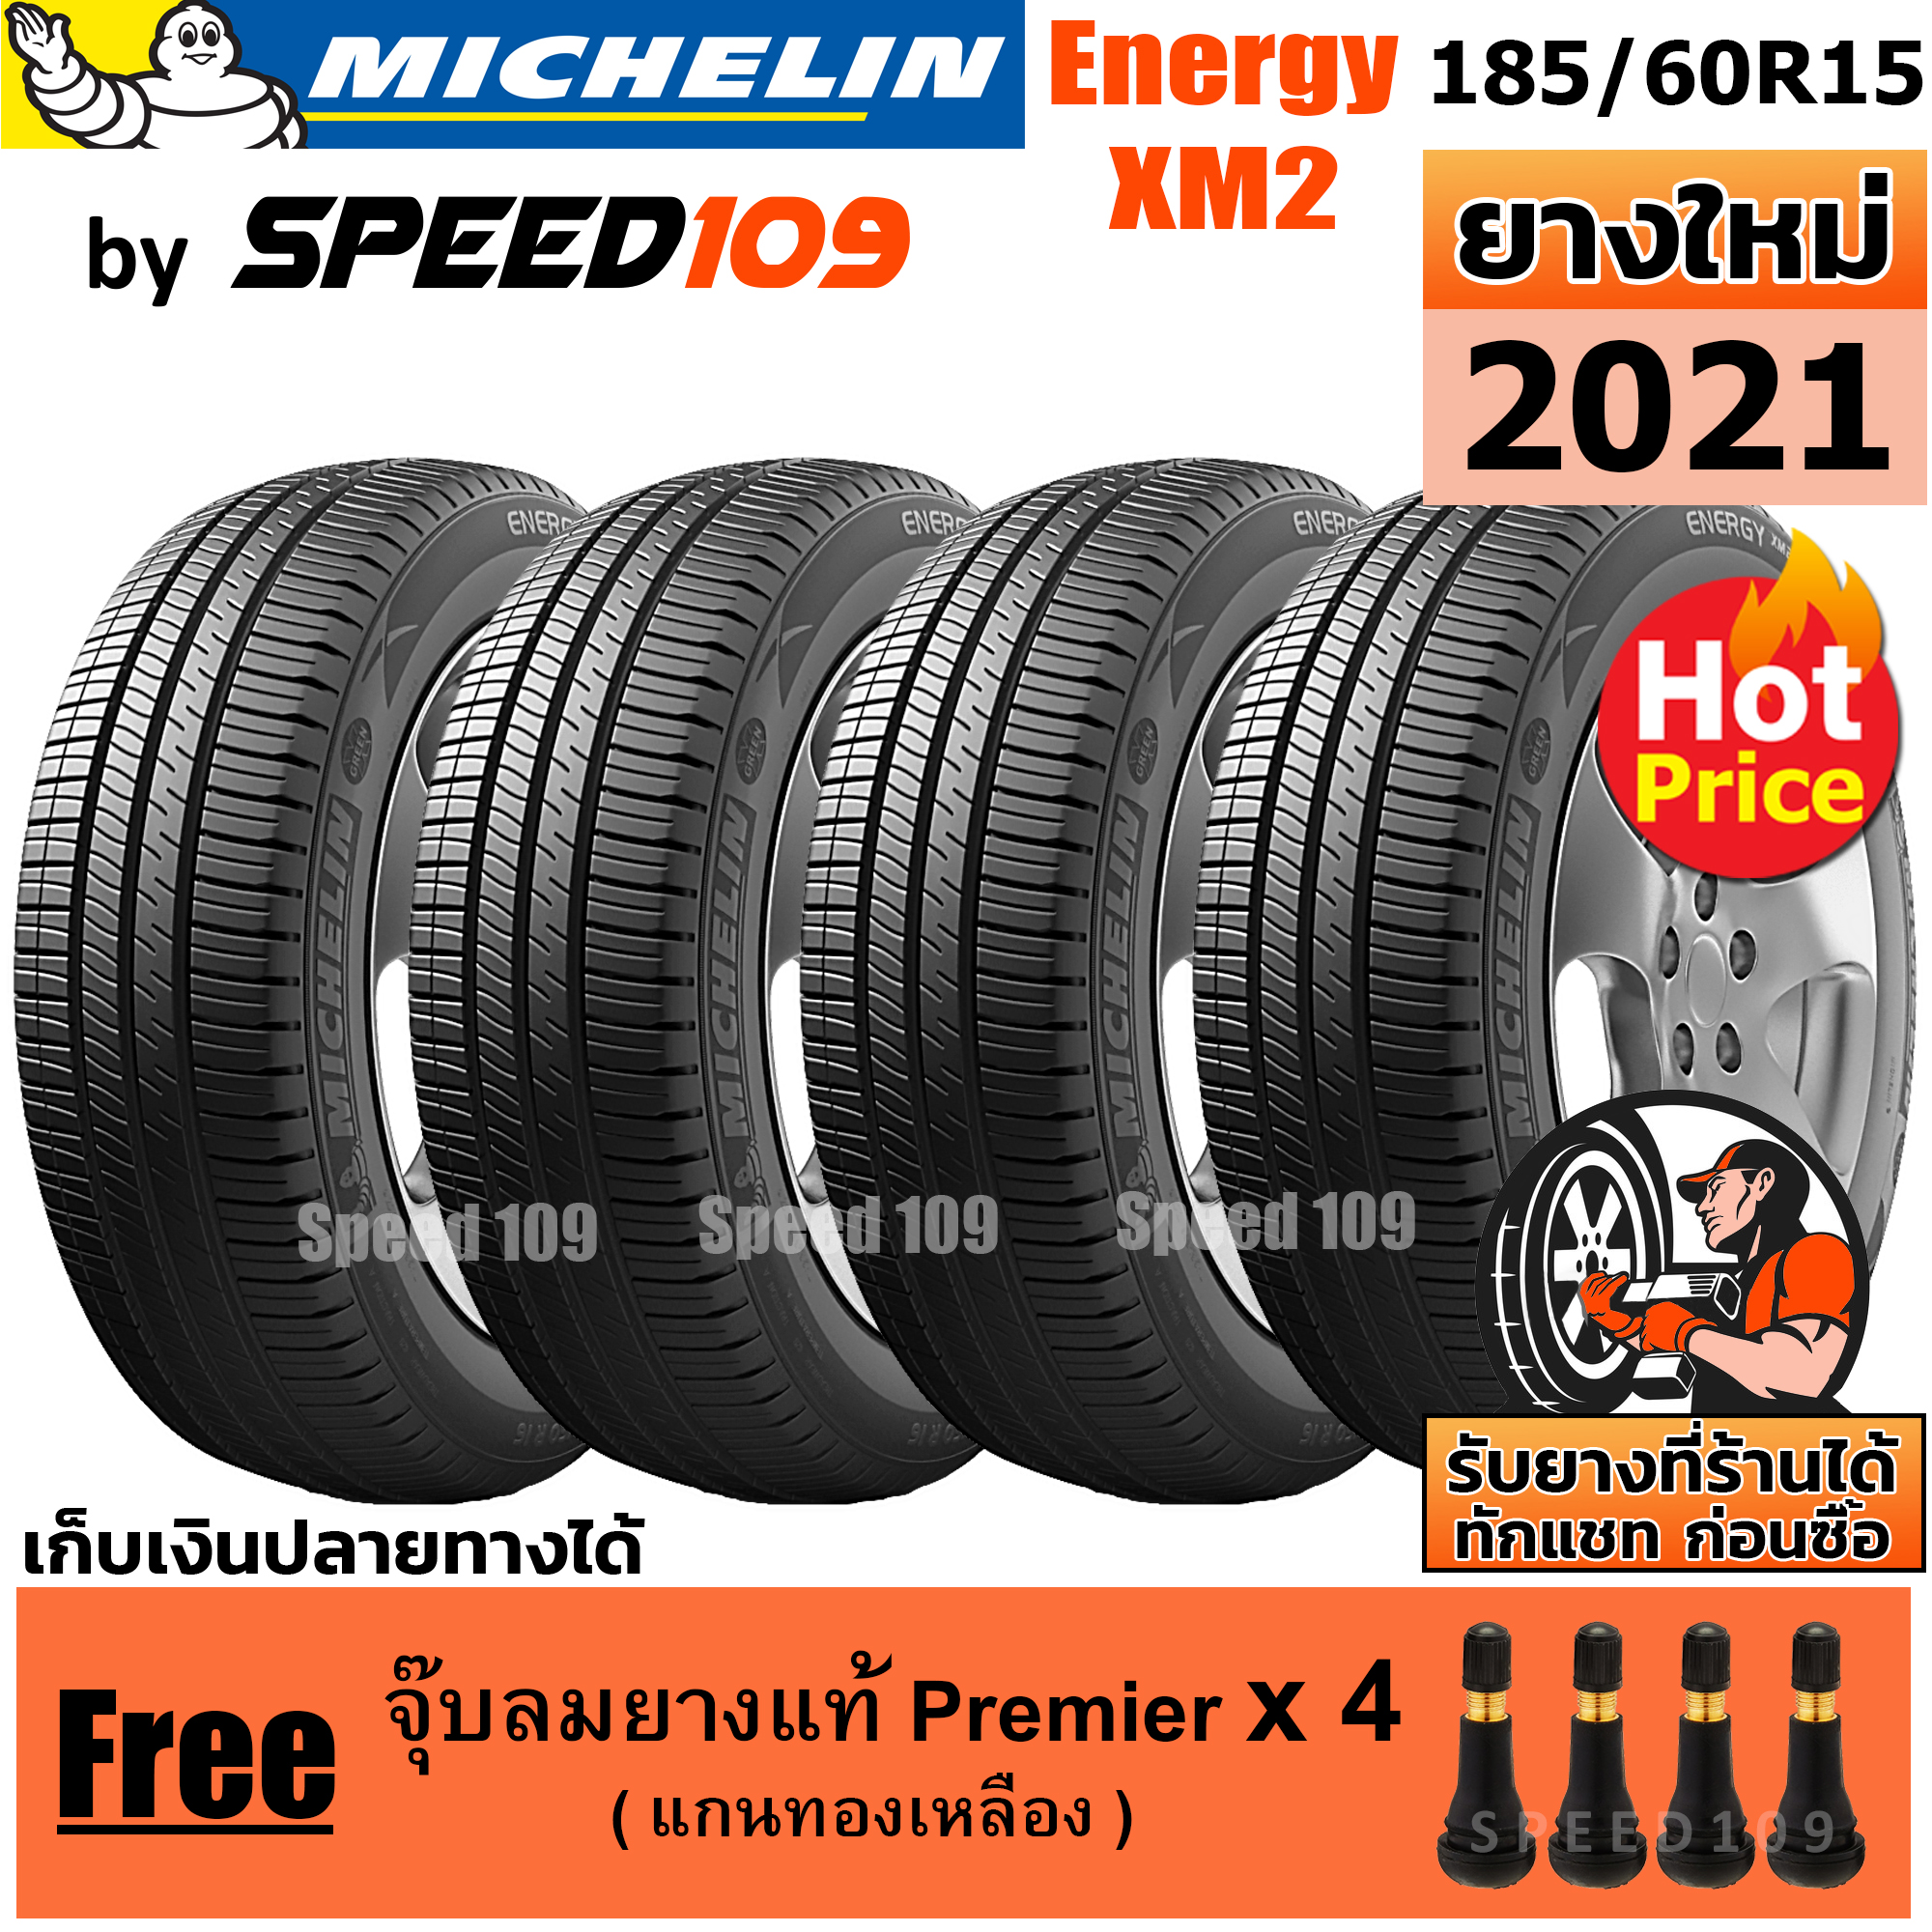 MICHELIN ยางรถยนต์ ขอบ 15 ขนาด 185/60R15 รุ่น Energy XM2 - 4 เส้น (ปี 2021)